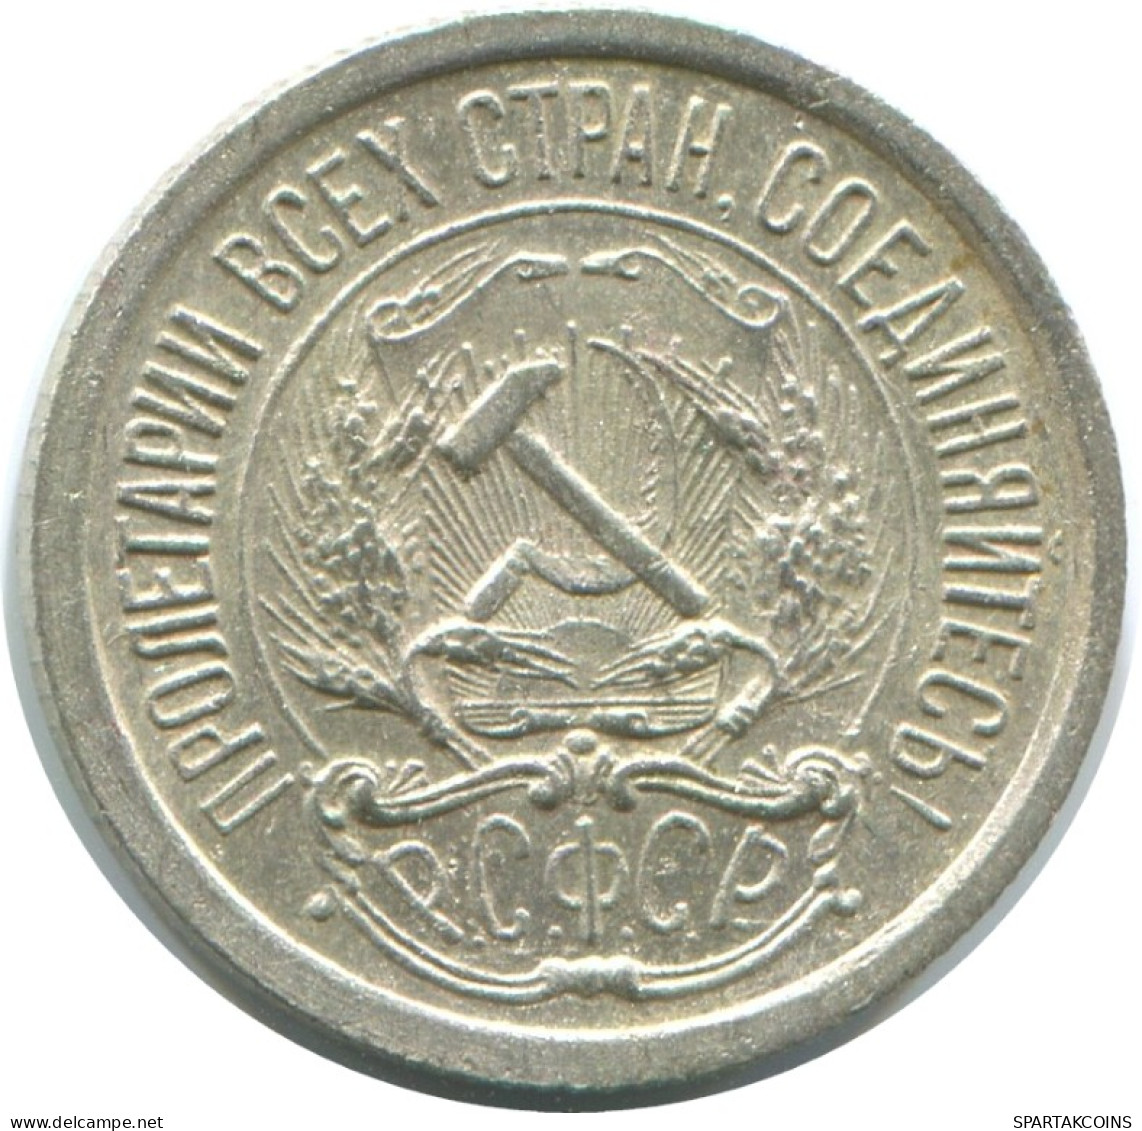 10 KOPEKS 1923 RUSSIA RSFSR SILVER Coin HIGH GRADE #AE918.4.U.A - Russia